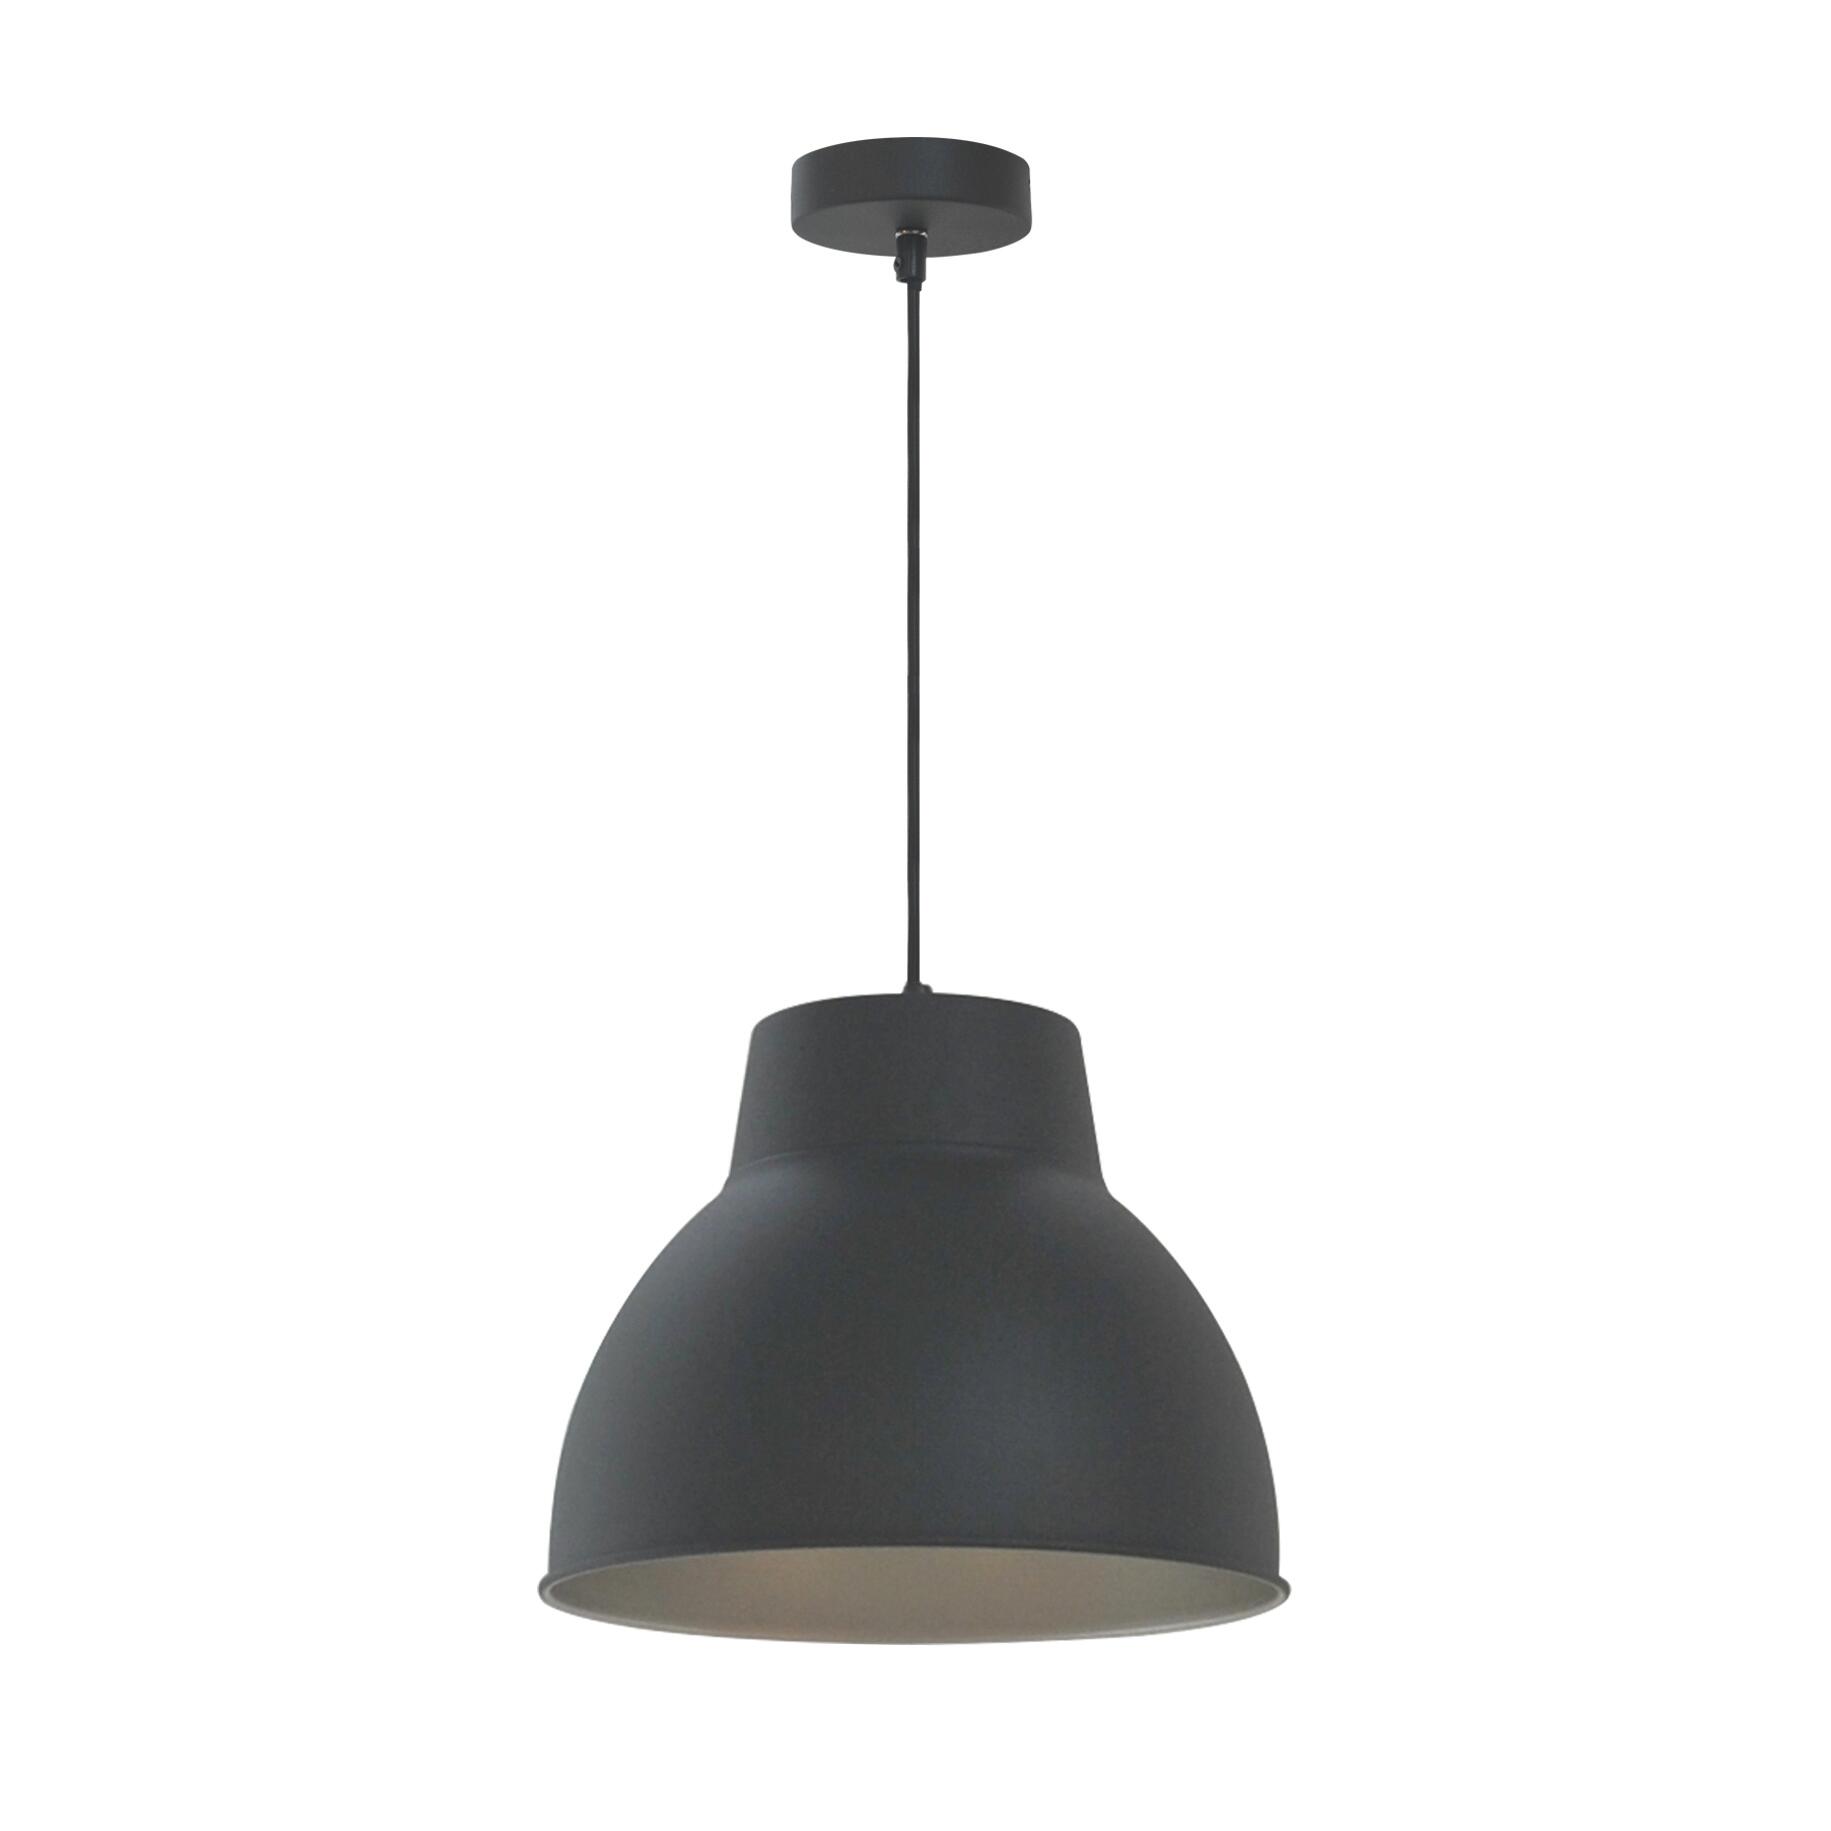 Lampadario Industriale Mezzo nero in metallo, D. 31 cm, INSPIRE - 10